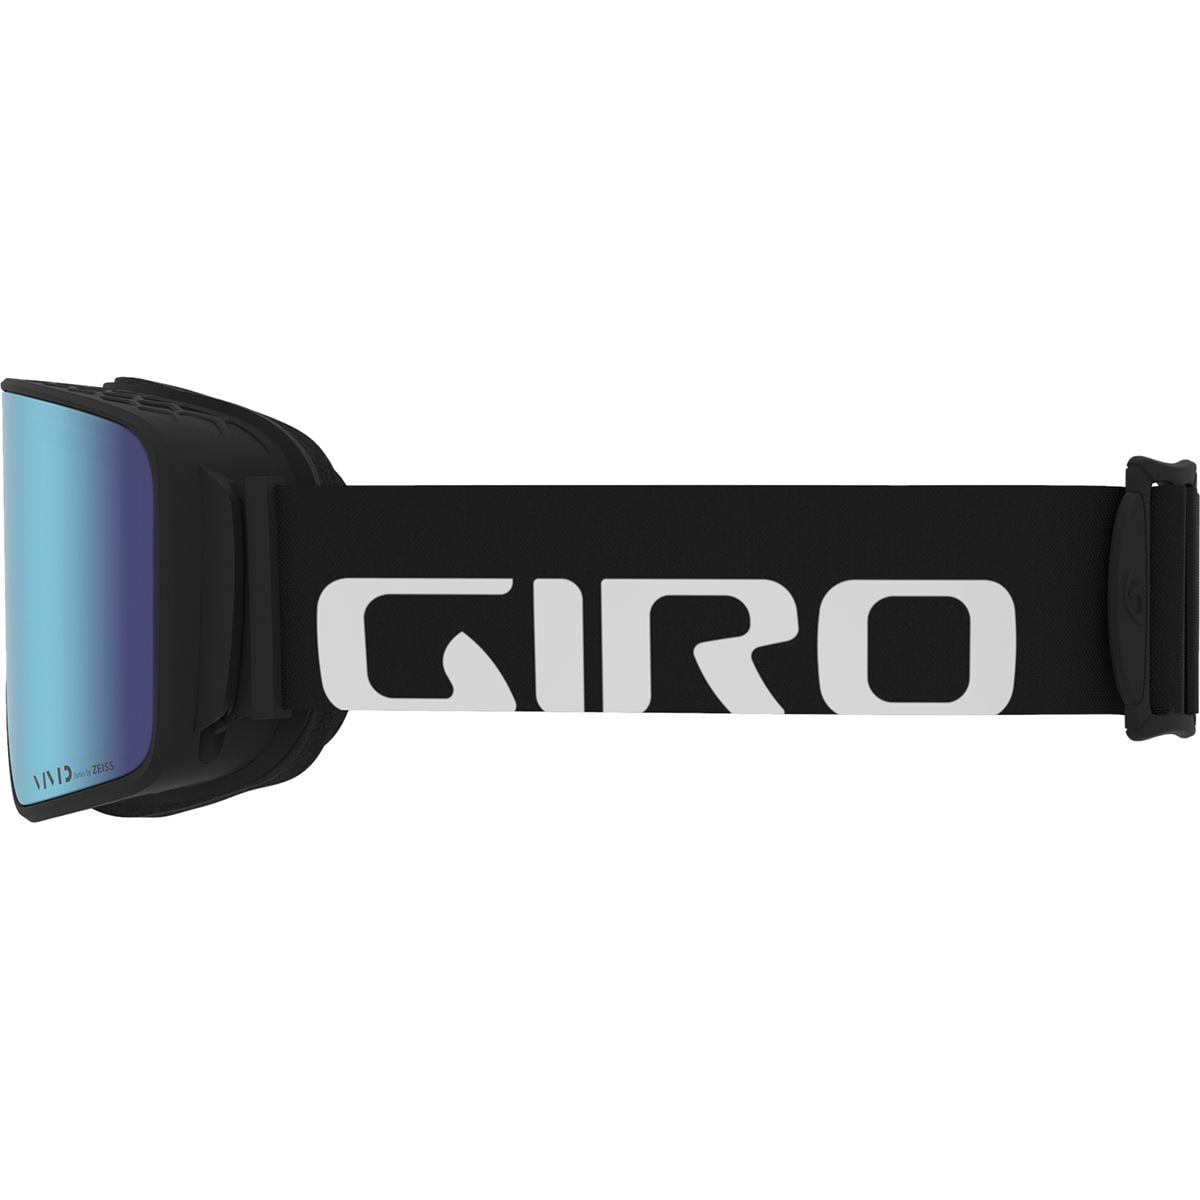 Giro Method Goggles | Backcountry.com